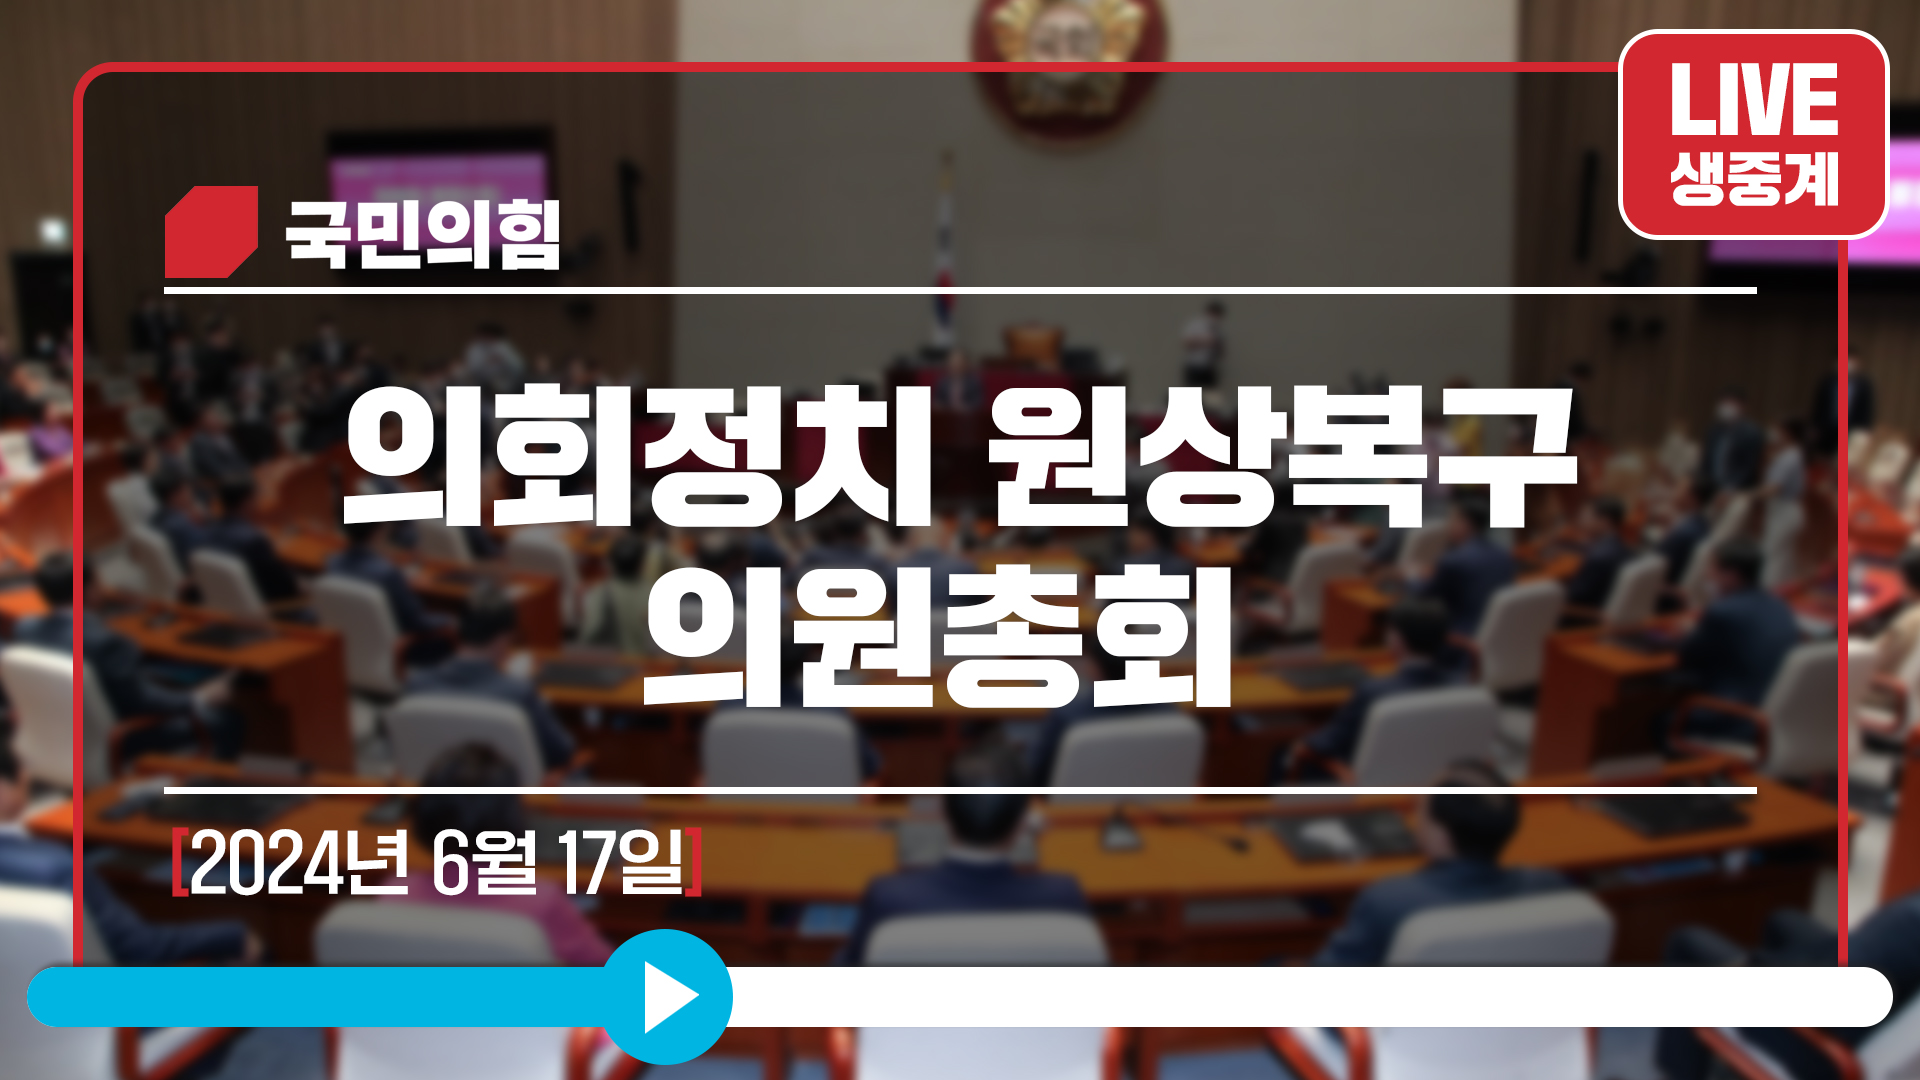 [Live] 6월 17일 의회정치 원상복구 의원총회